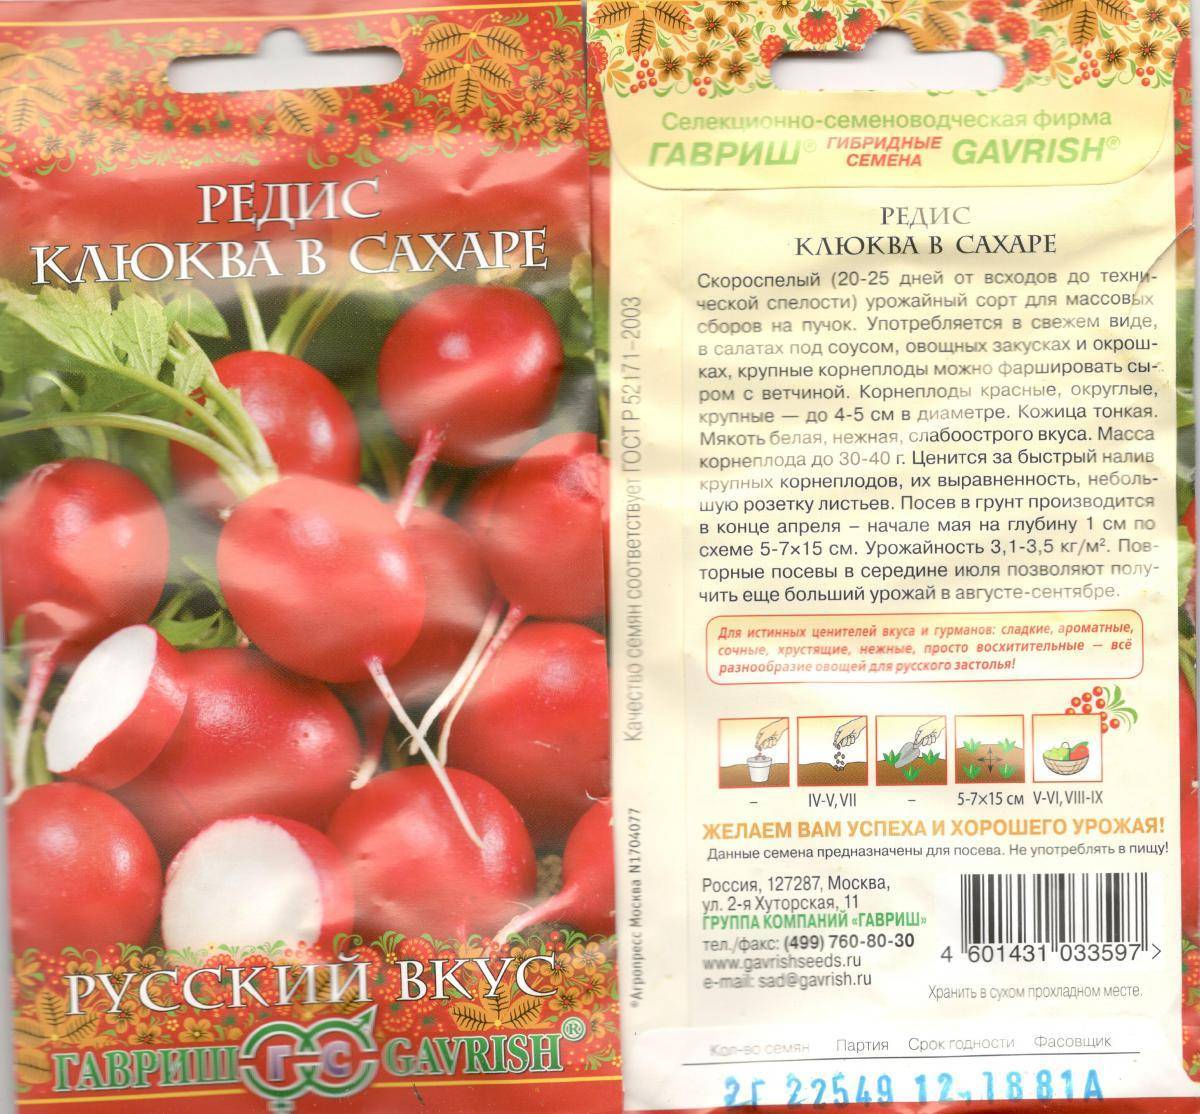 Неприхотливый томат «султан f1»: характеристика и описание сорта, фото помидоров